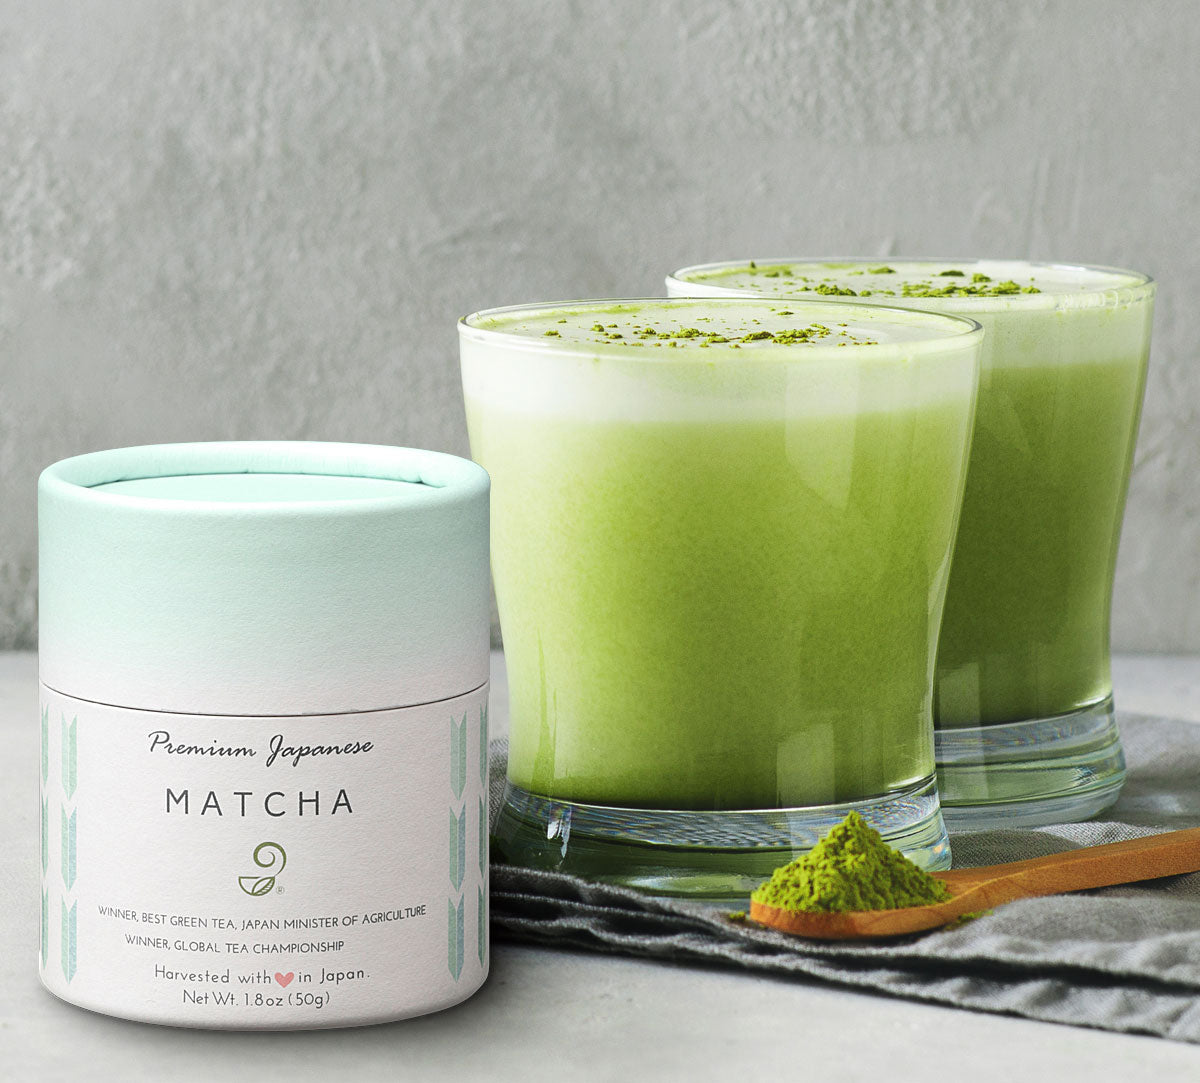 Matcha Powder from Japan, Organic Matcha Green Tea Powder, No Sugar Added  Matcha Tea Powder for Matcha Latte, Japanese Green Tea Matcha - Premium